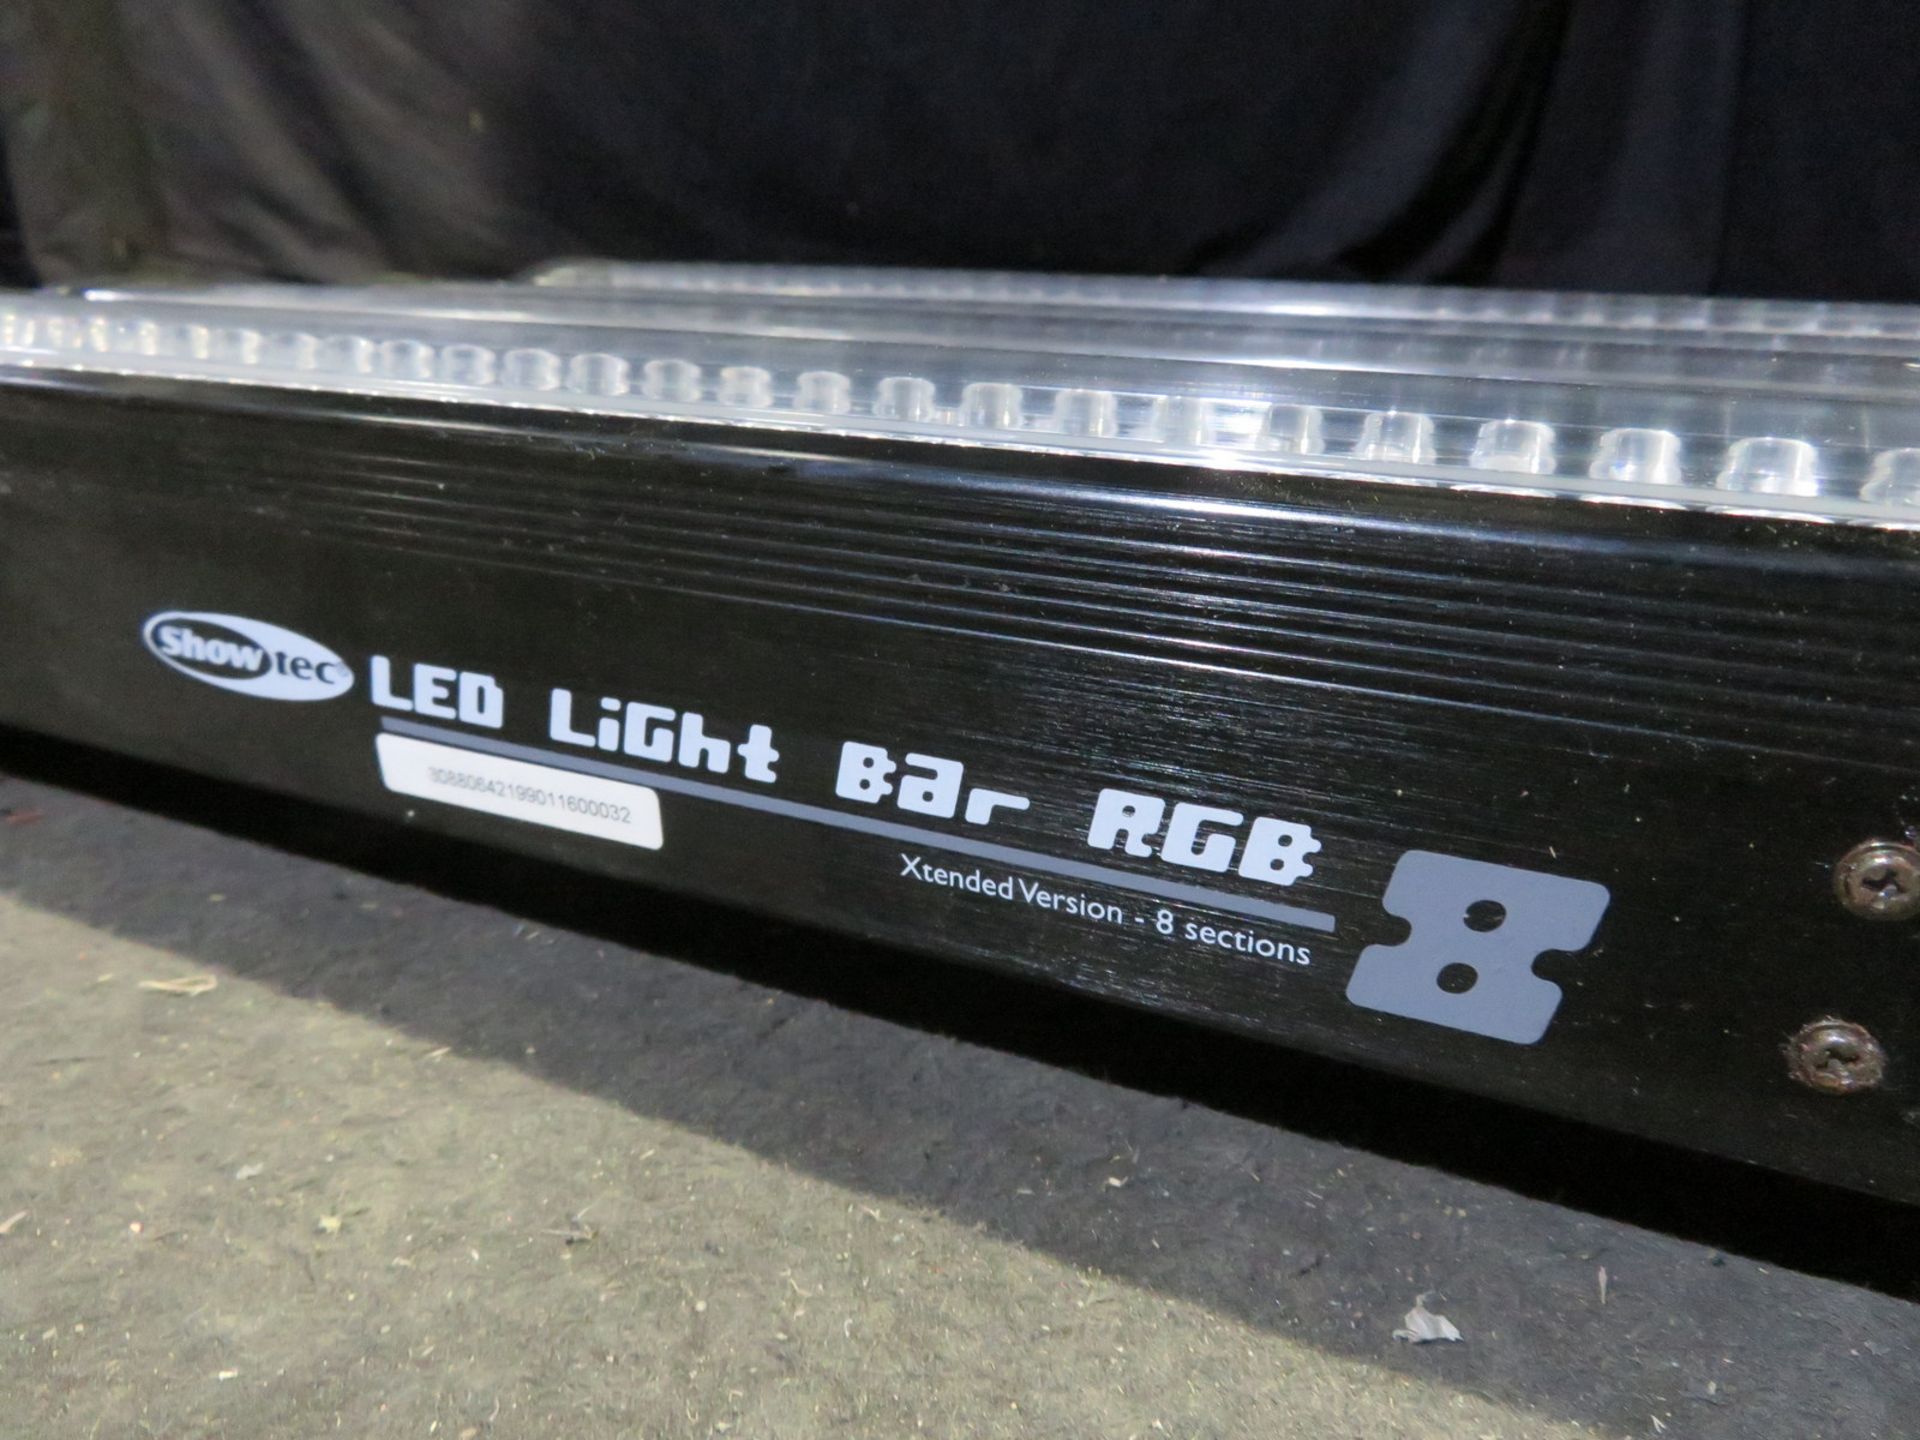 4x Showtec LED Lightbar RGB 8. All working - Image 6 of 6